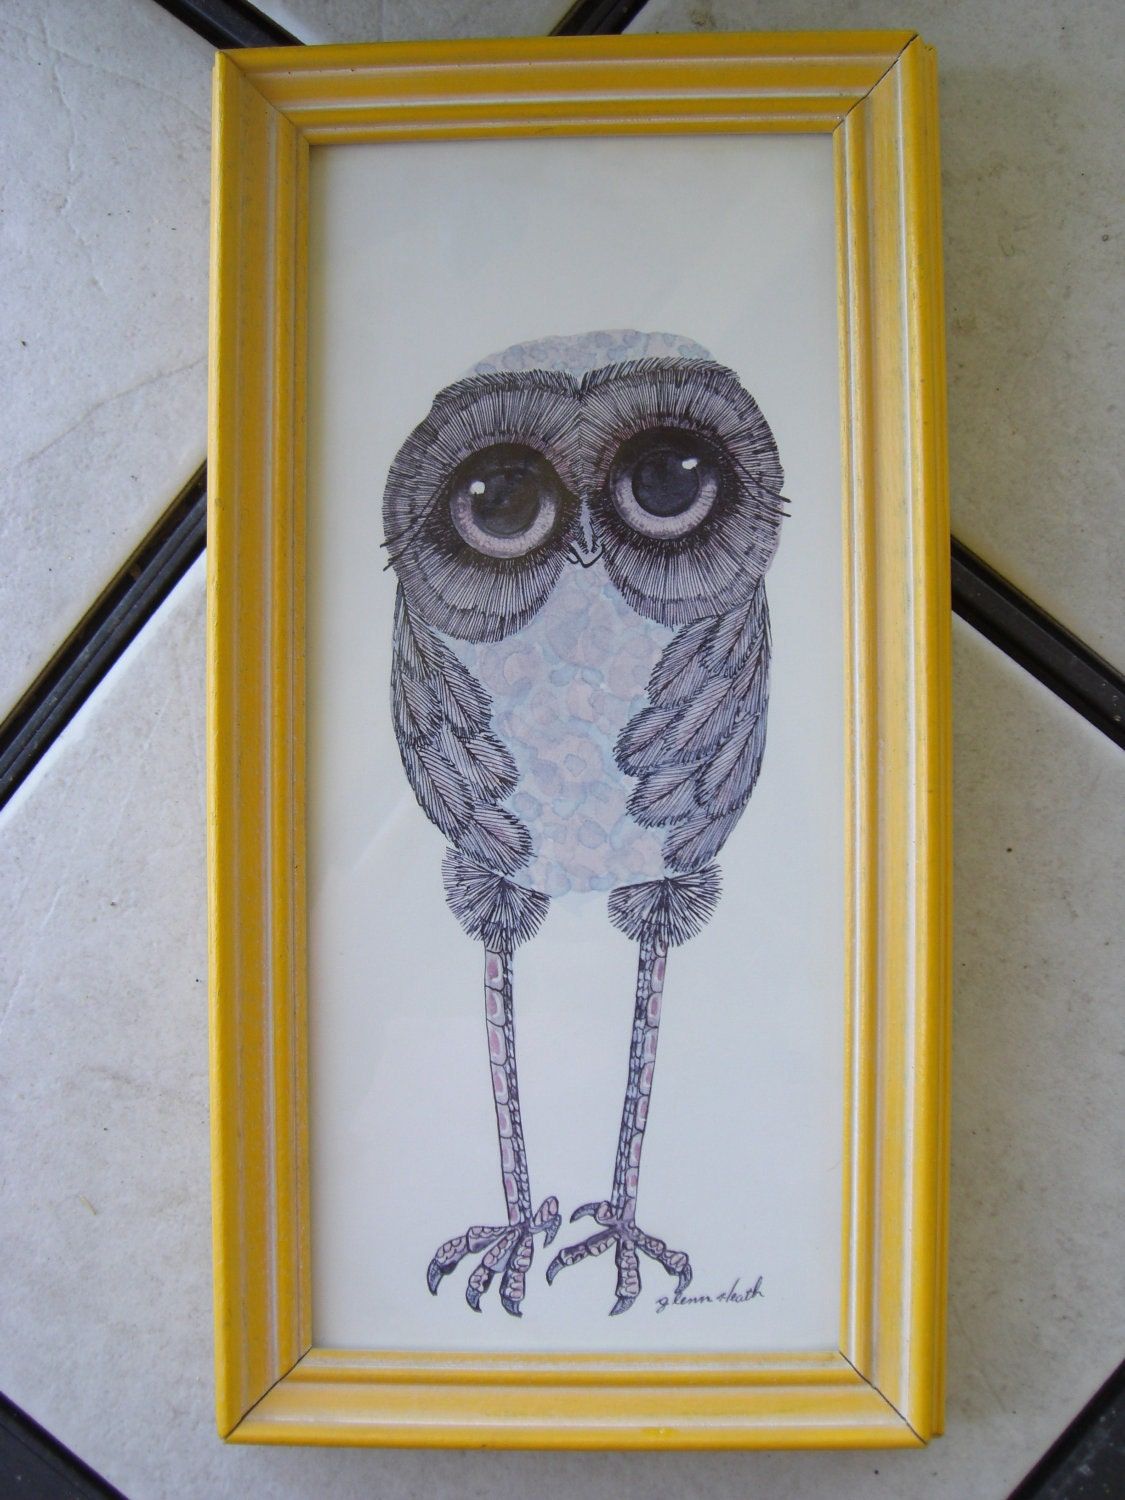 Framed Glenn Heath Owl Print With Regard To Current The Owl Framed Art Prints (View 9 of 20)